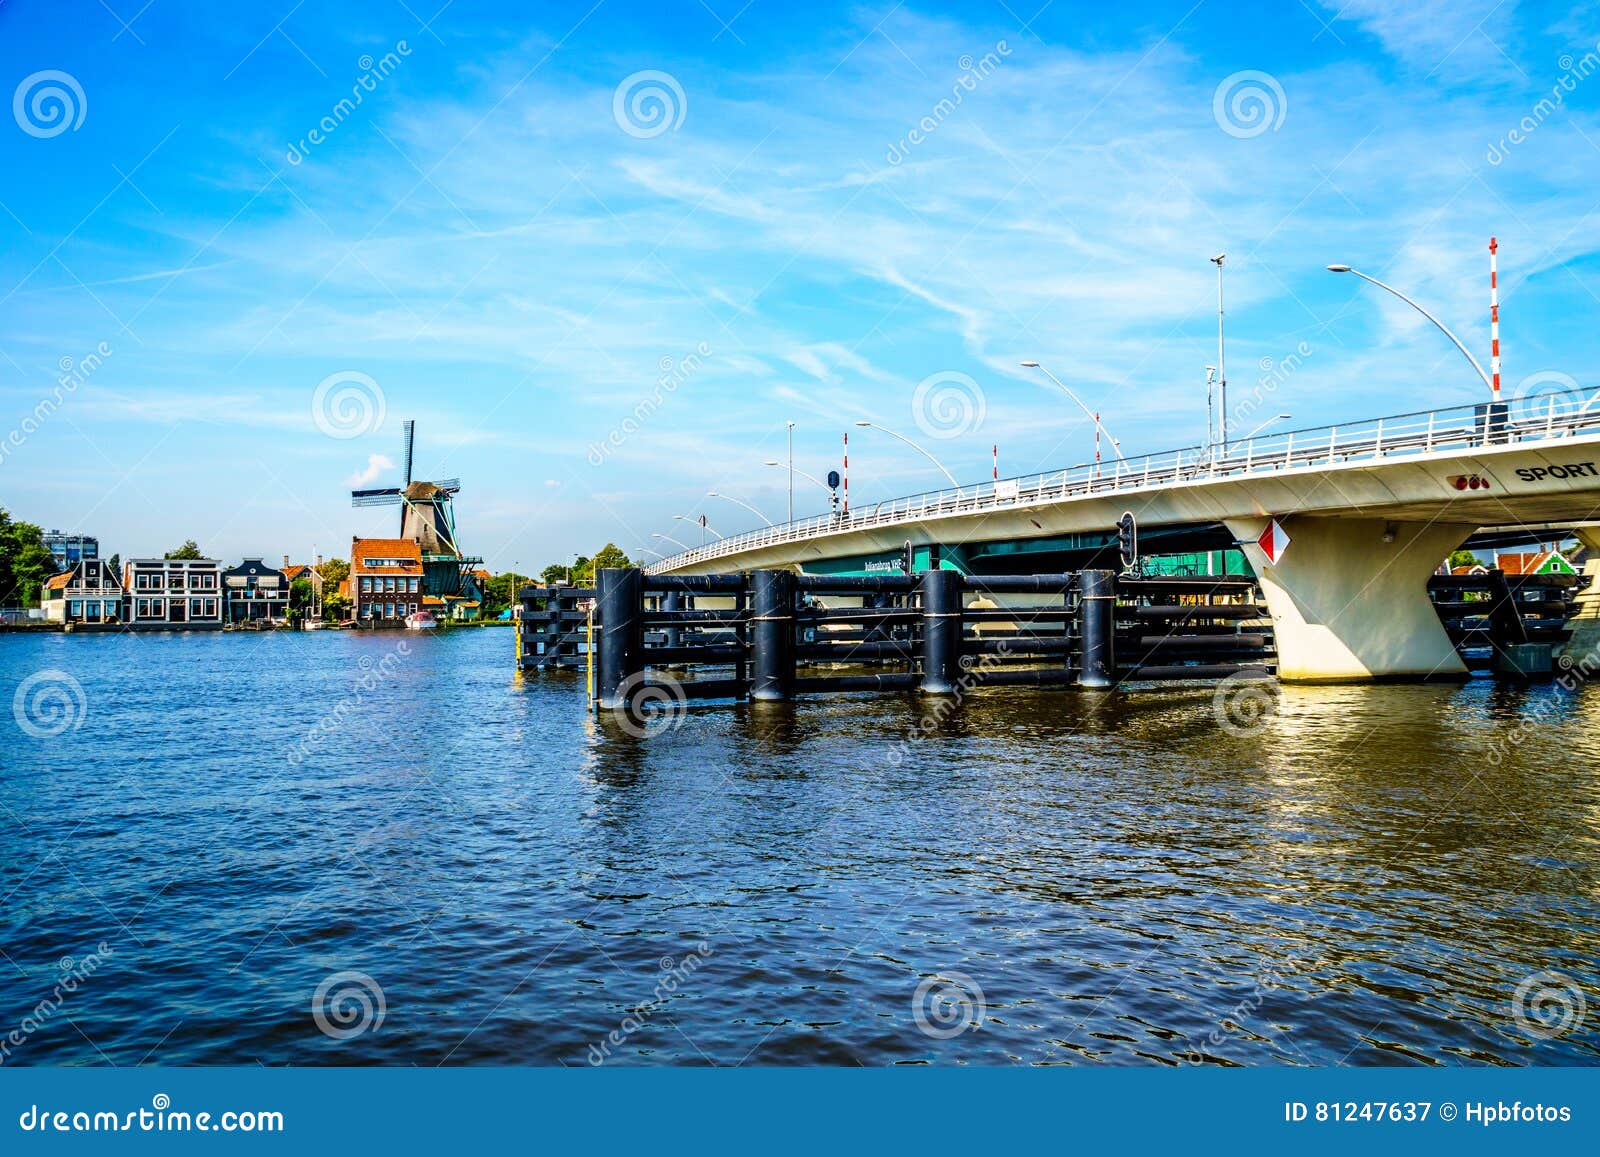 modern draw bridge at the town of zaandijk crossing the zaan river